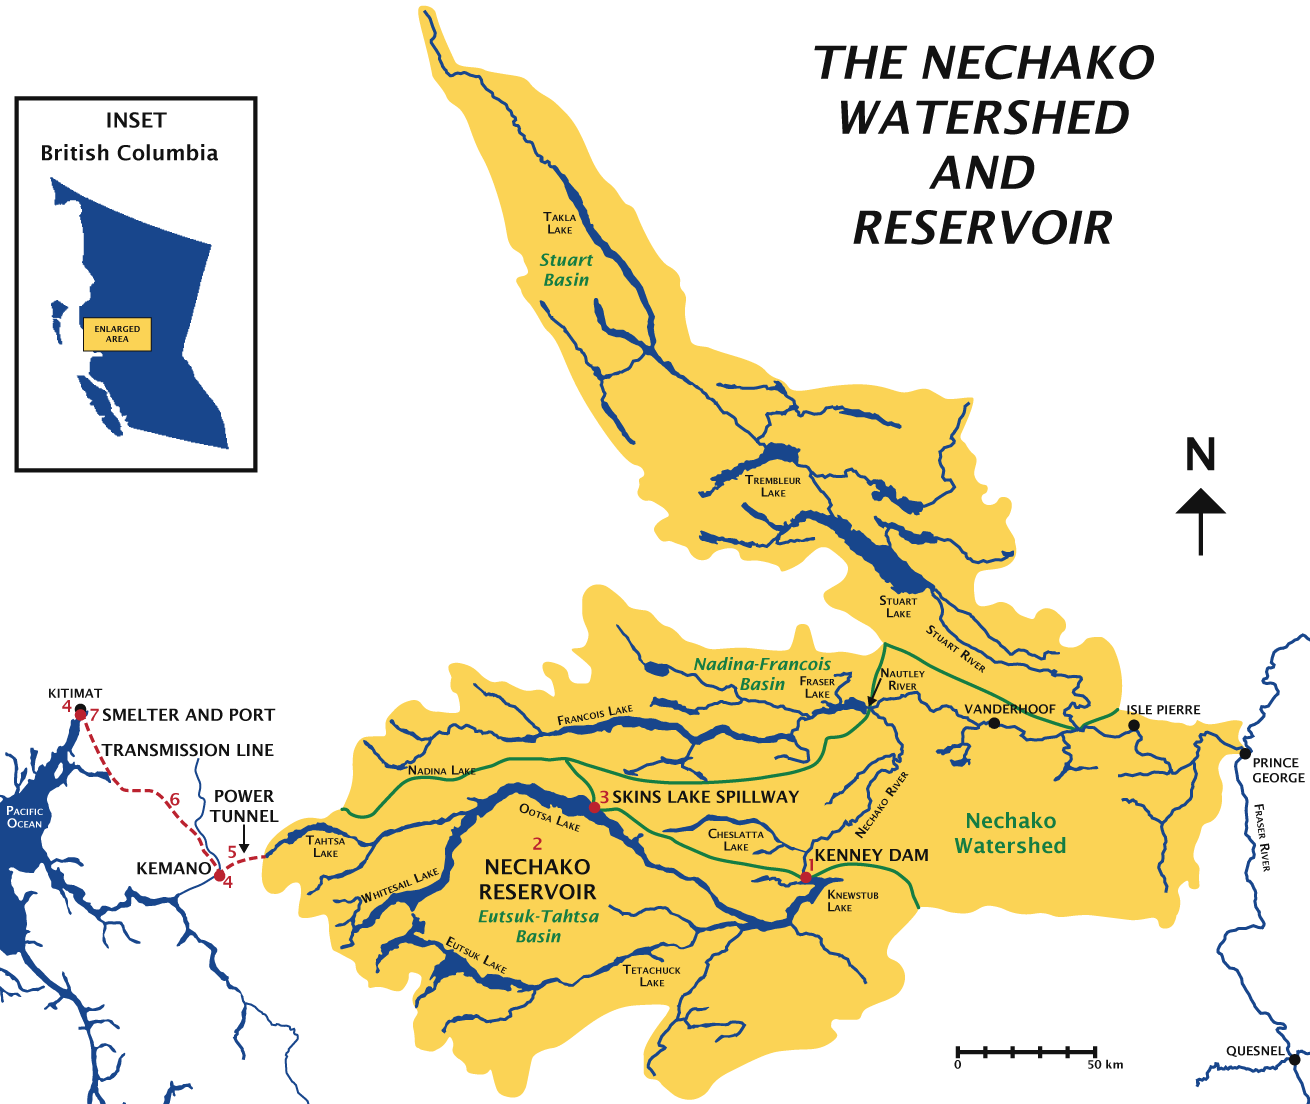 Nechako Watershed and sub basins and key locations